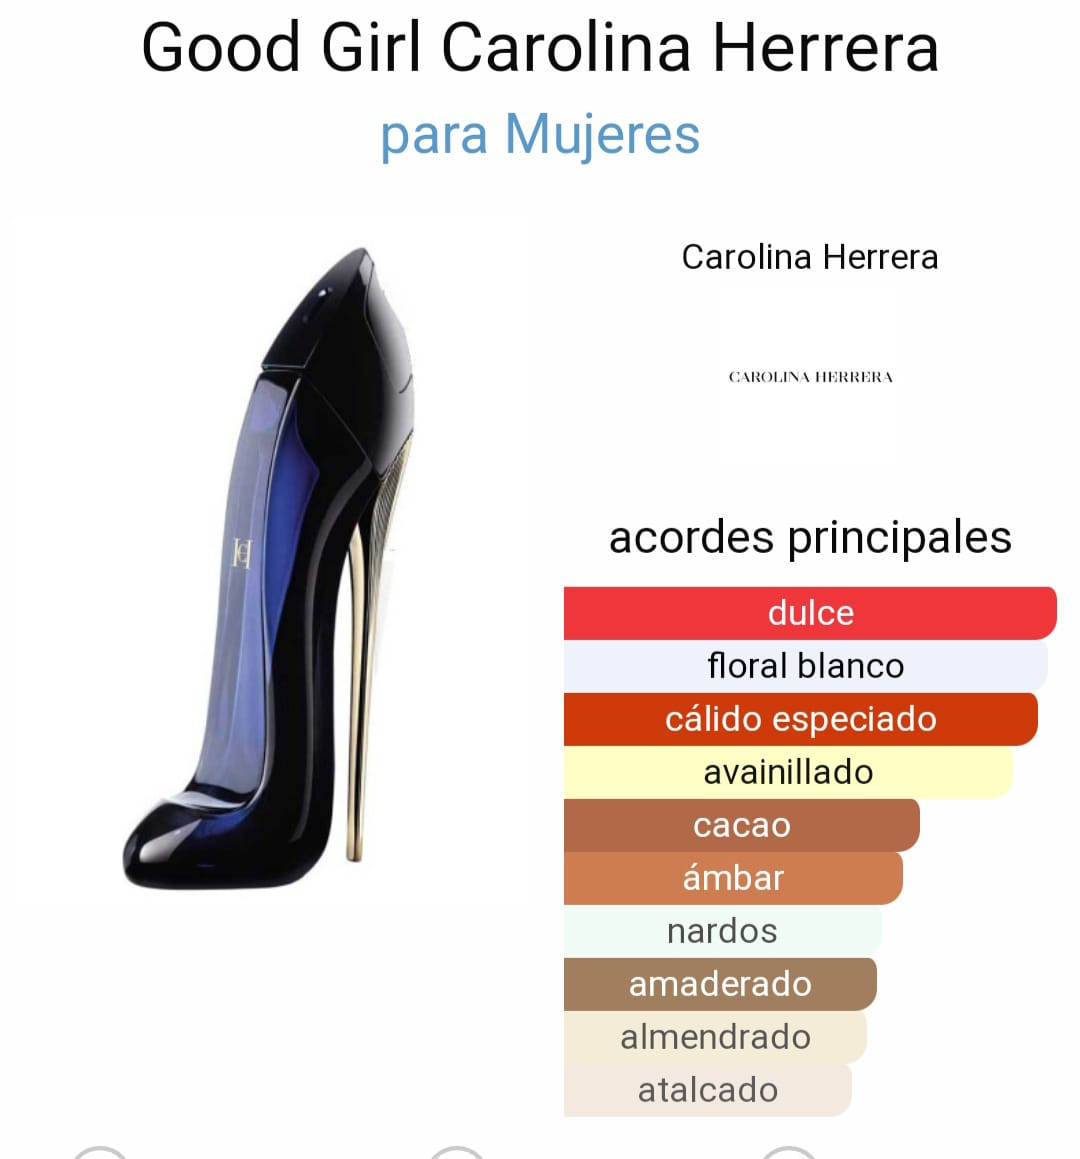 Good Girl Carolina Herrera - Mujer